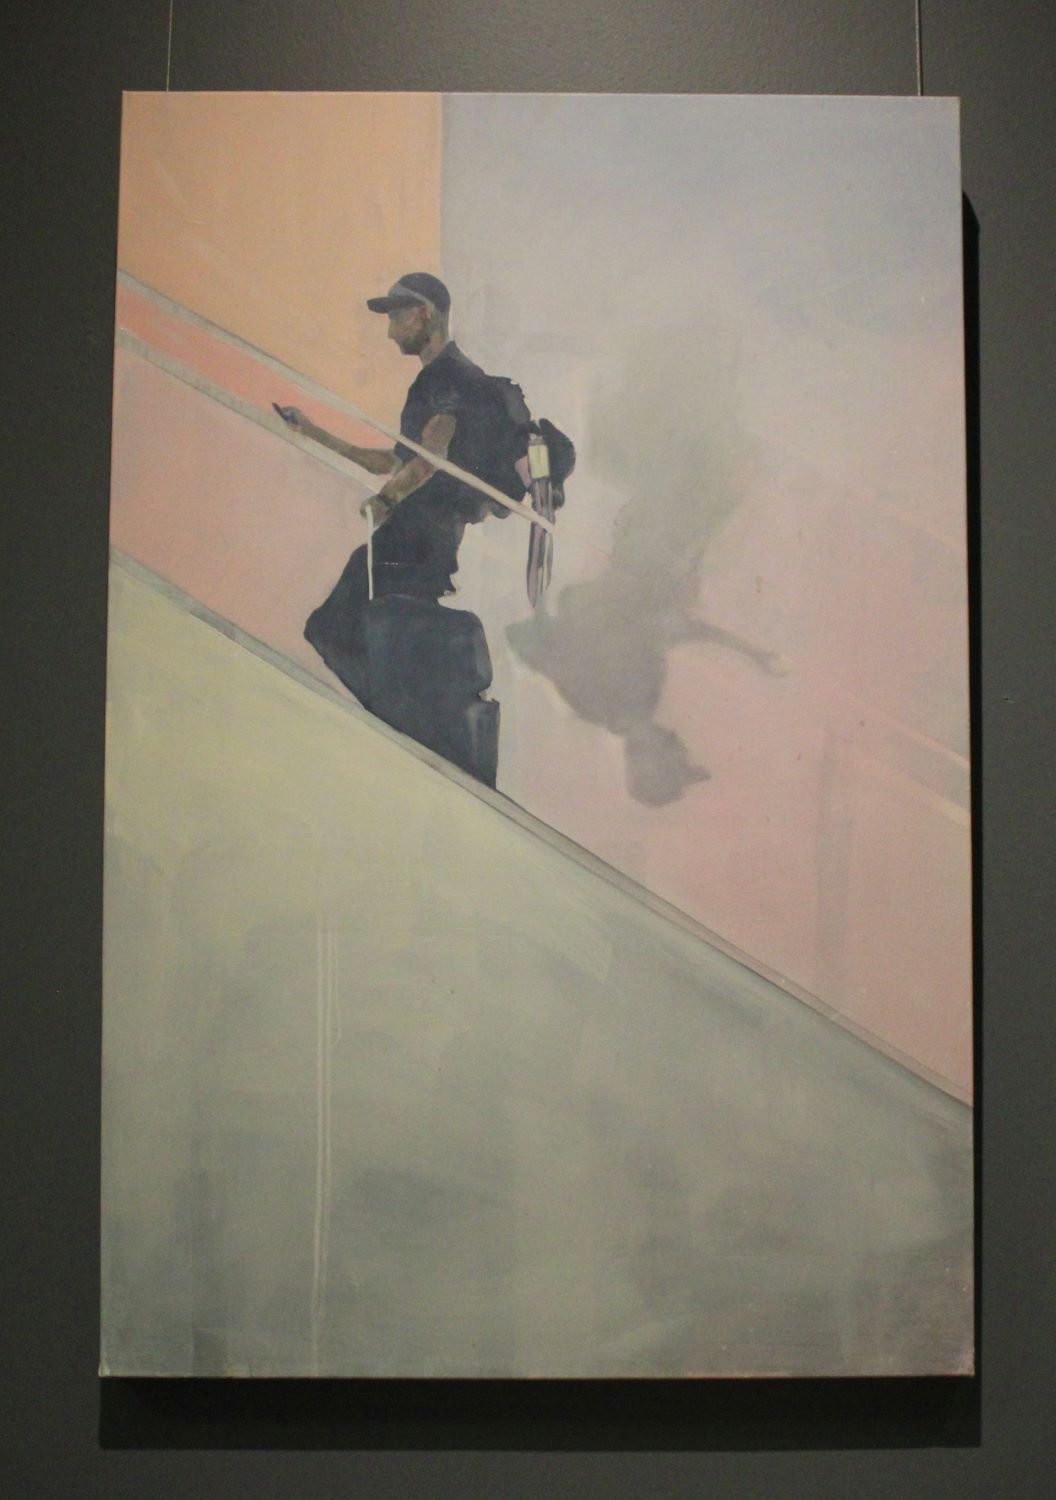 Painting of a man riding an escalator.